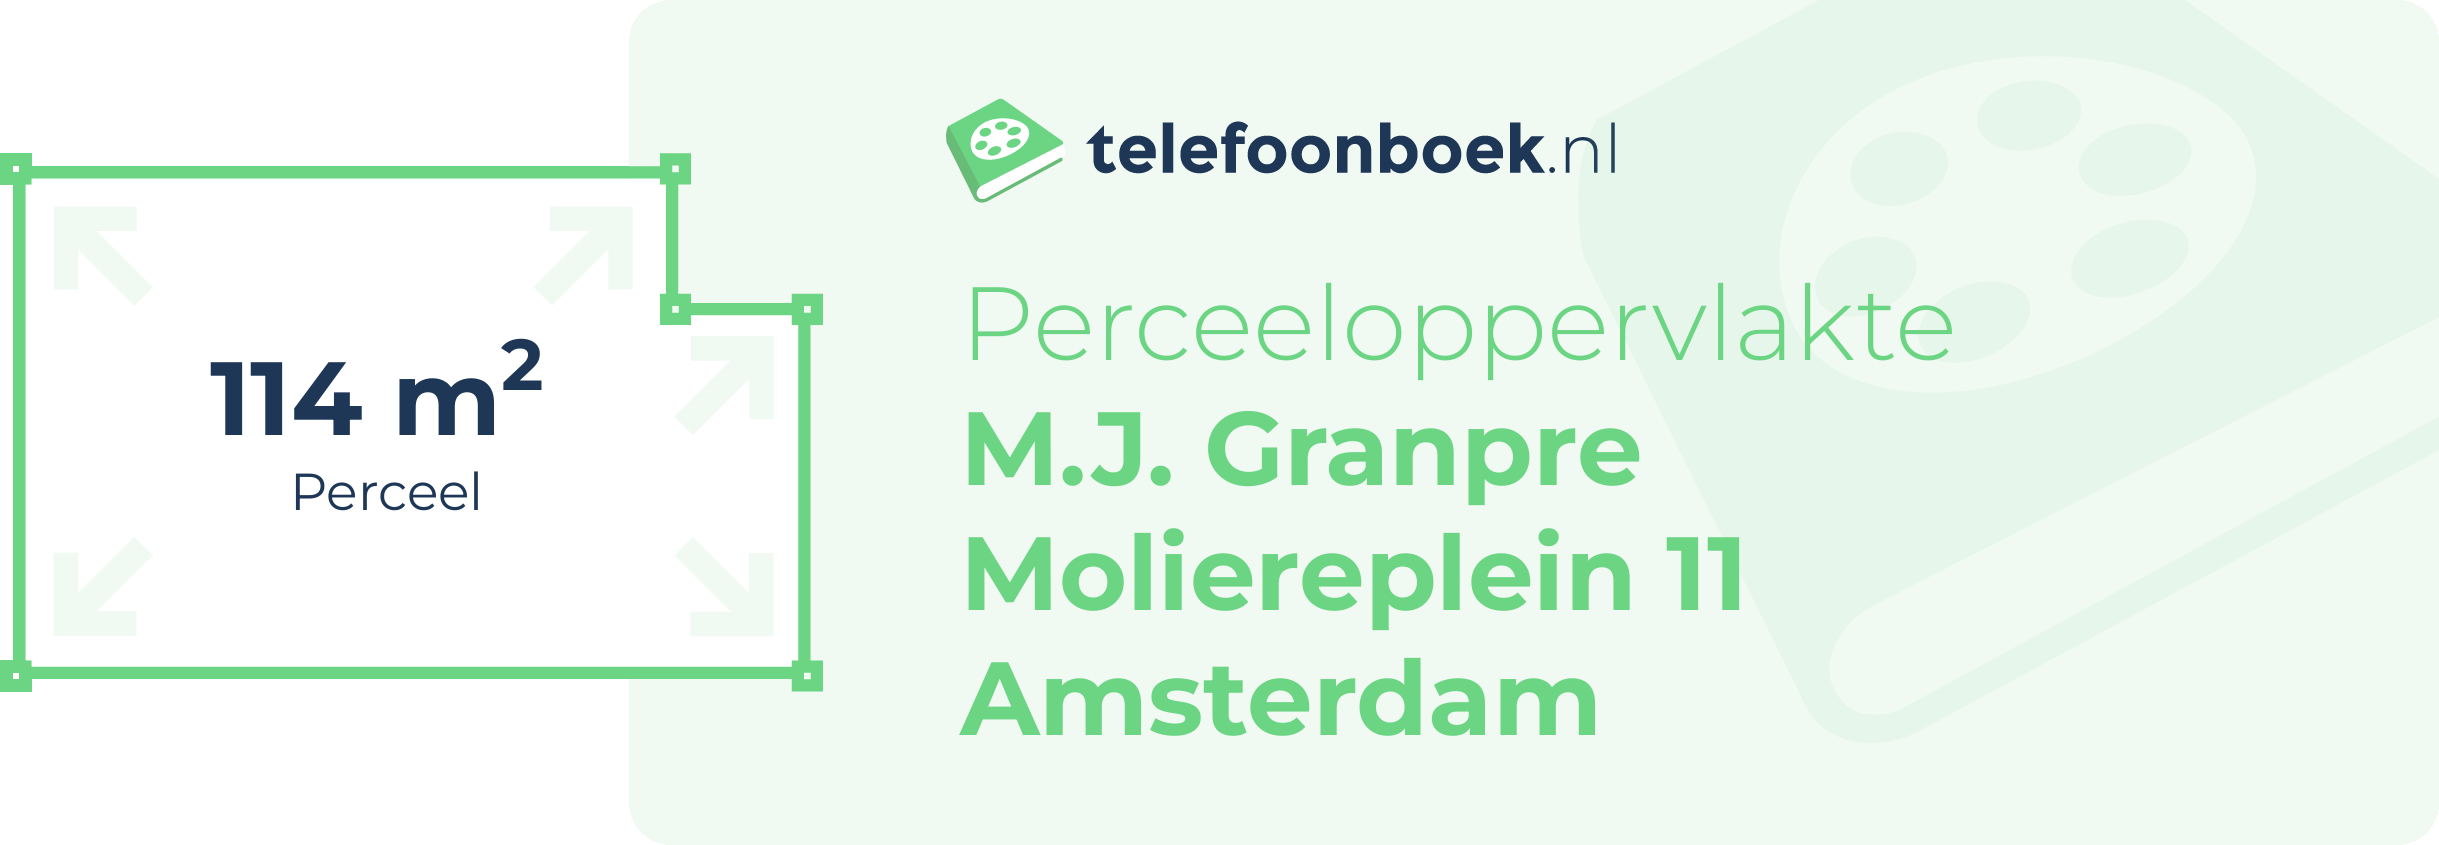 Perceeloppervlakte M.J. Granpre Moliereplein 11 Amsterdam